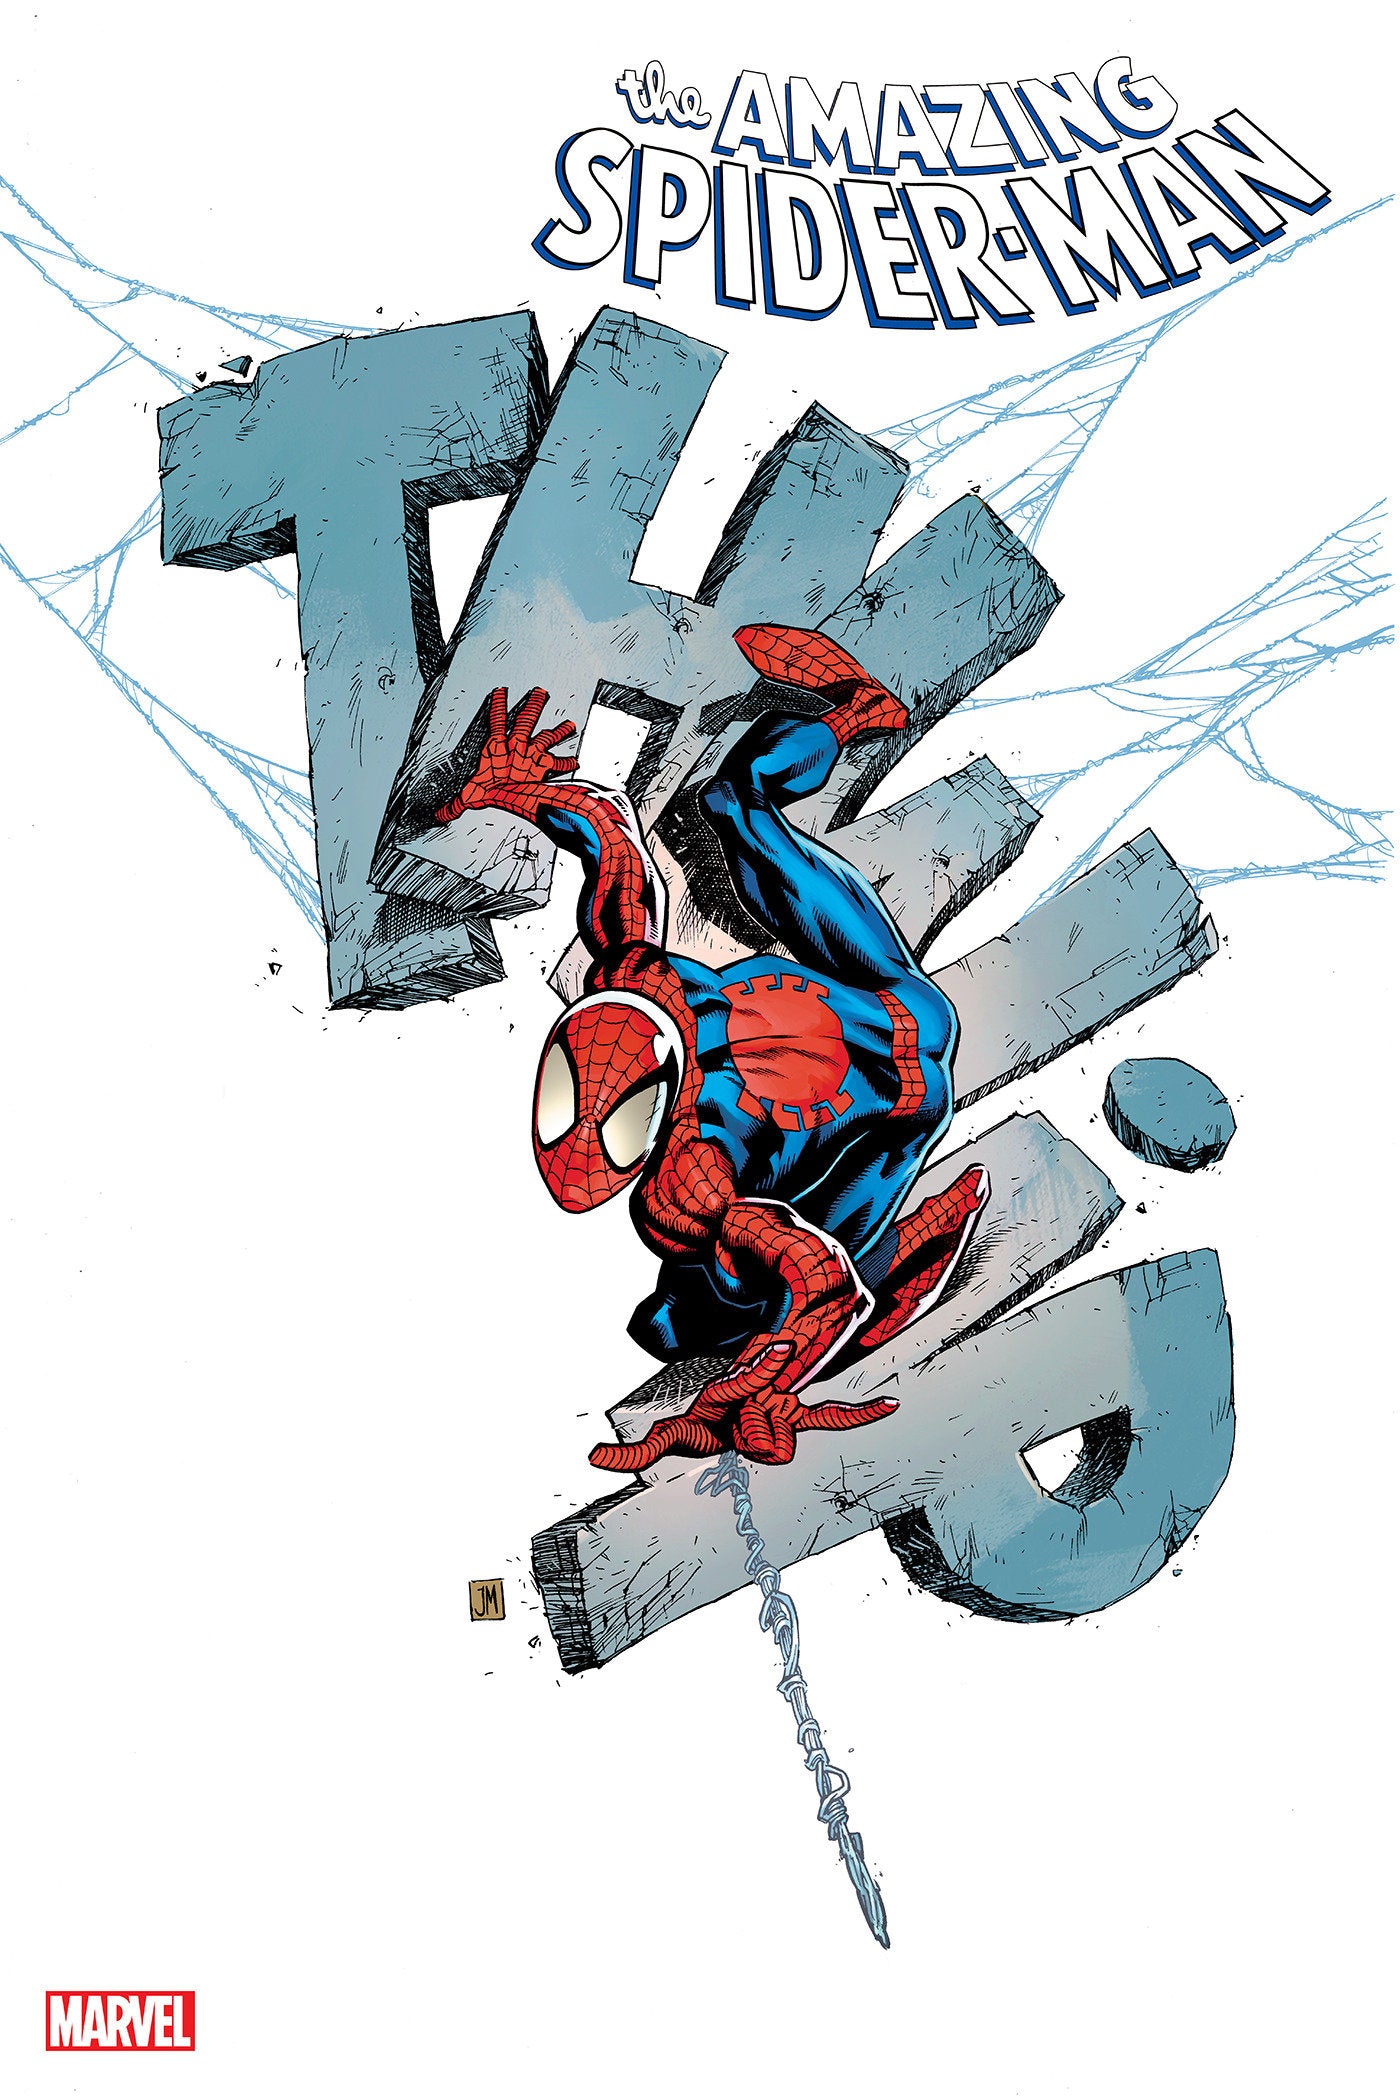 Amazing Spider-Man #43 Justin Mason Thwip Variant [Gw]